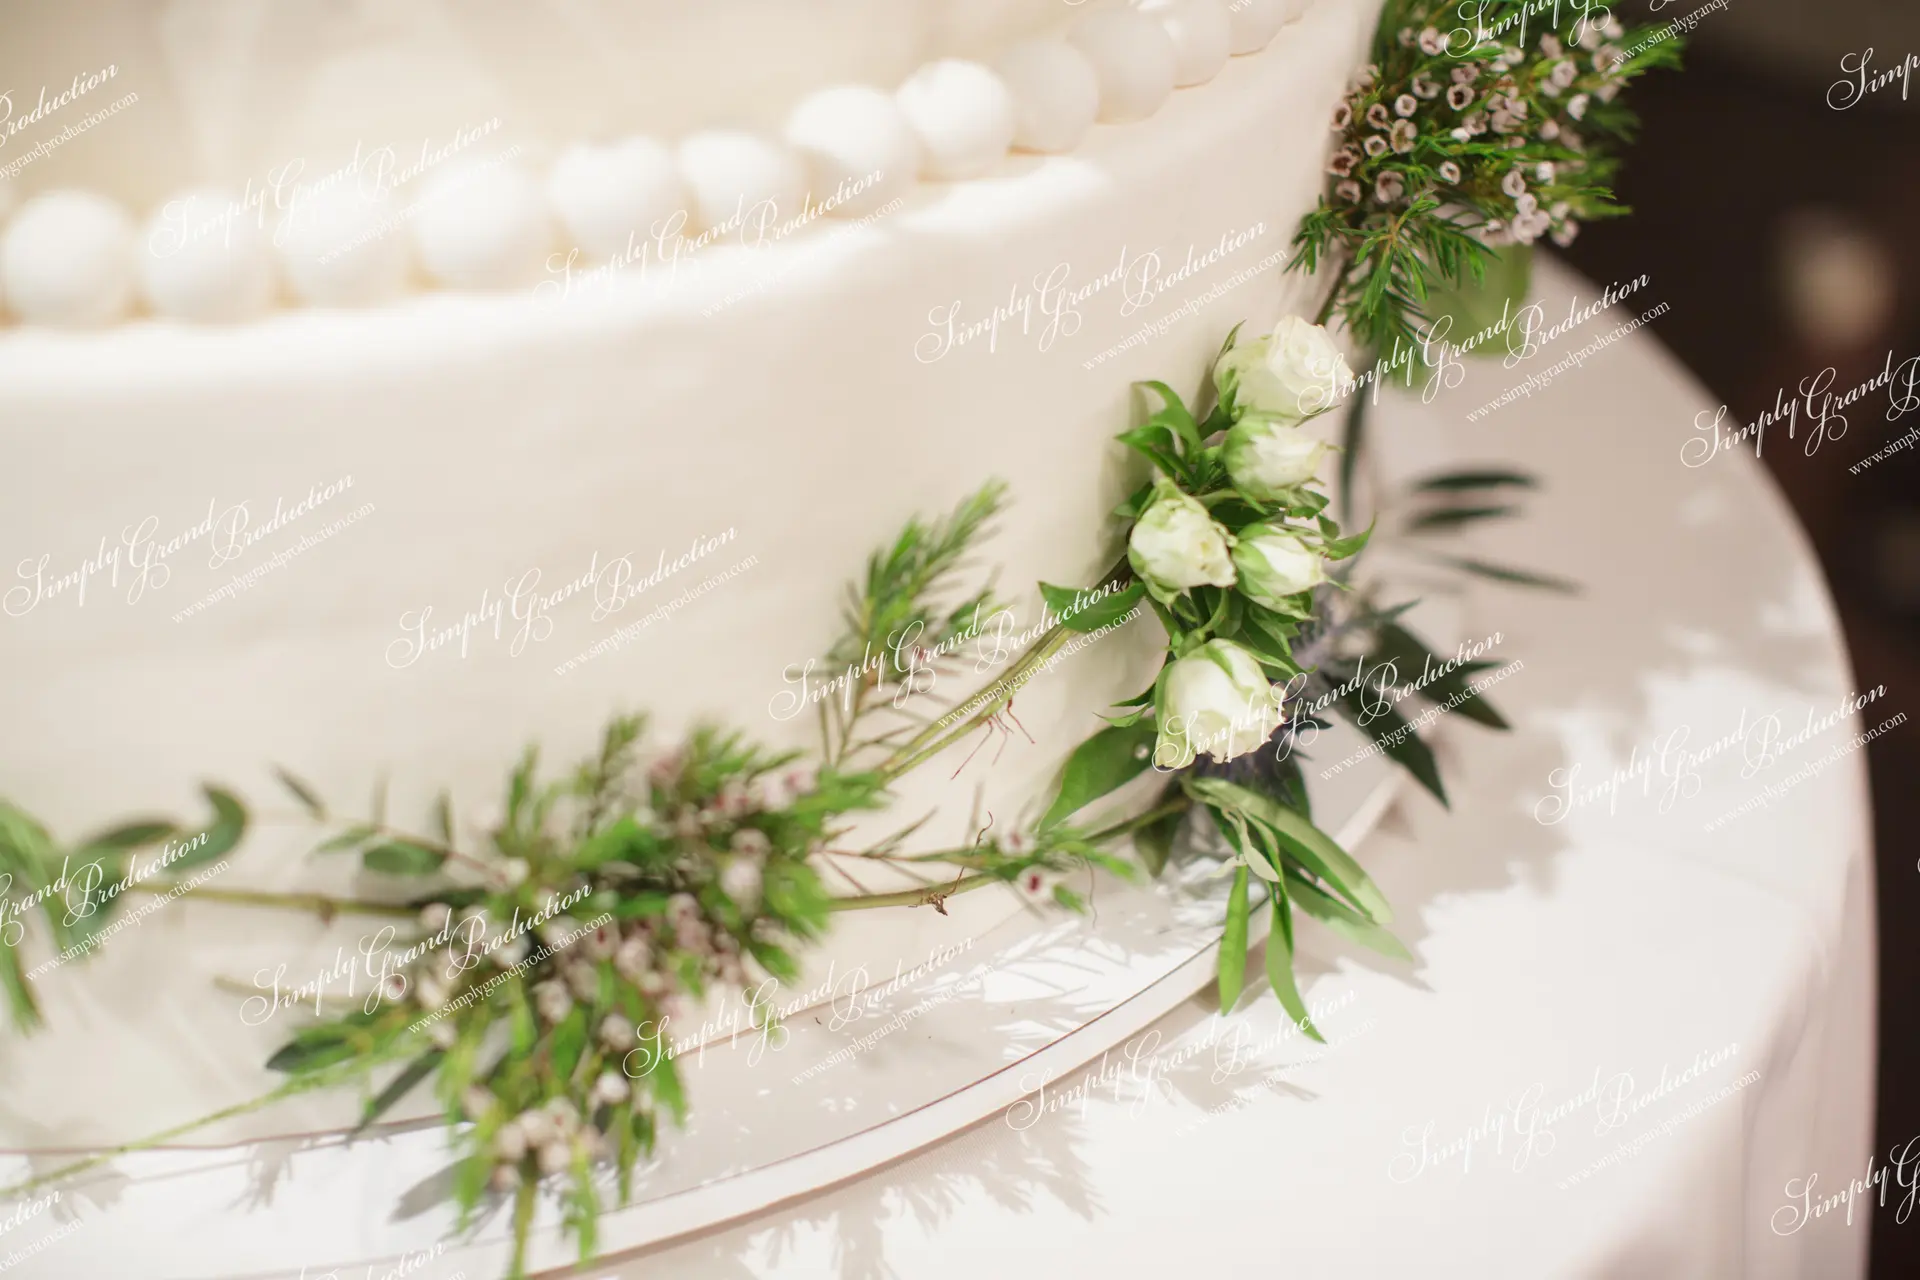 Simply_Grand_Production_Ballroom_wedding_decoration_cake_weddingsweets_white_green_Grand_Hyatt_2_2_wm